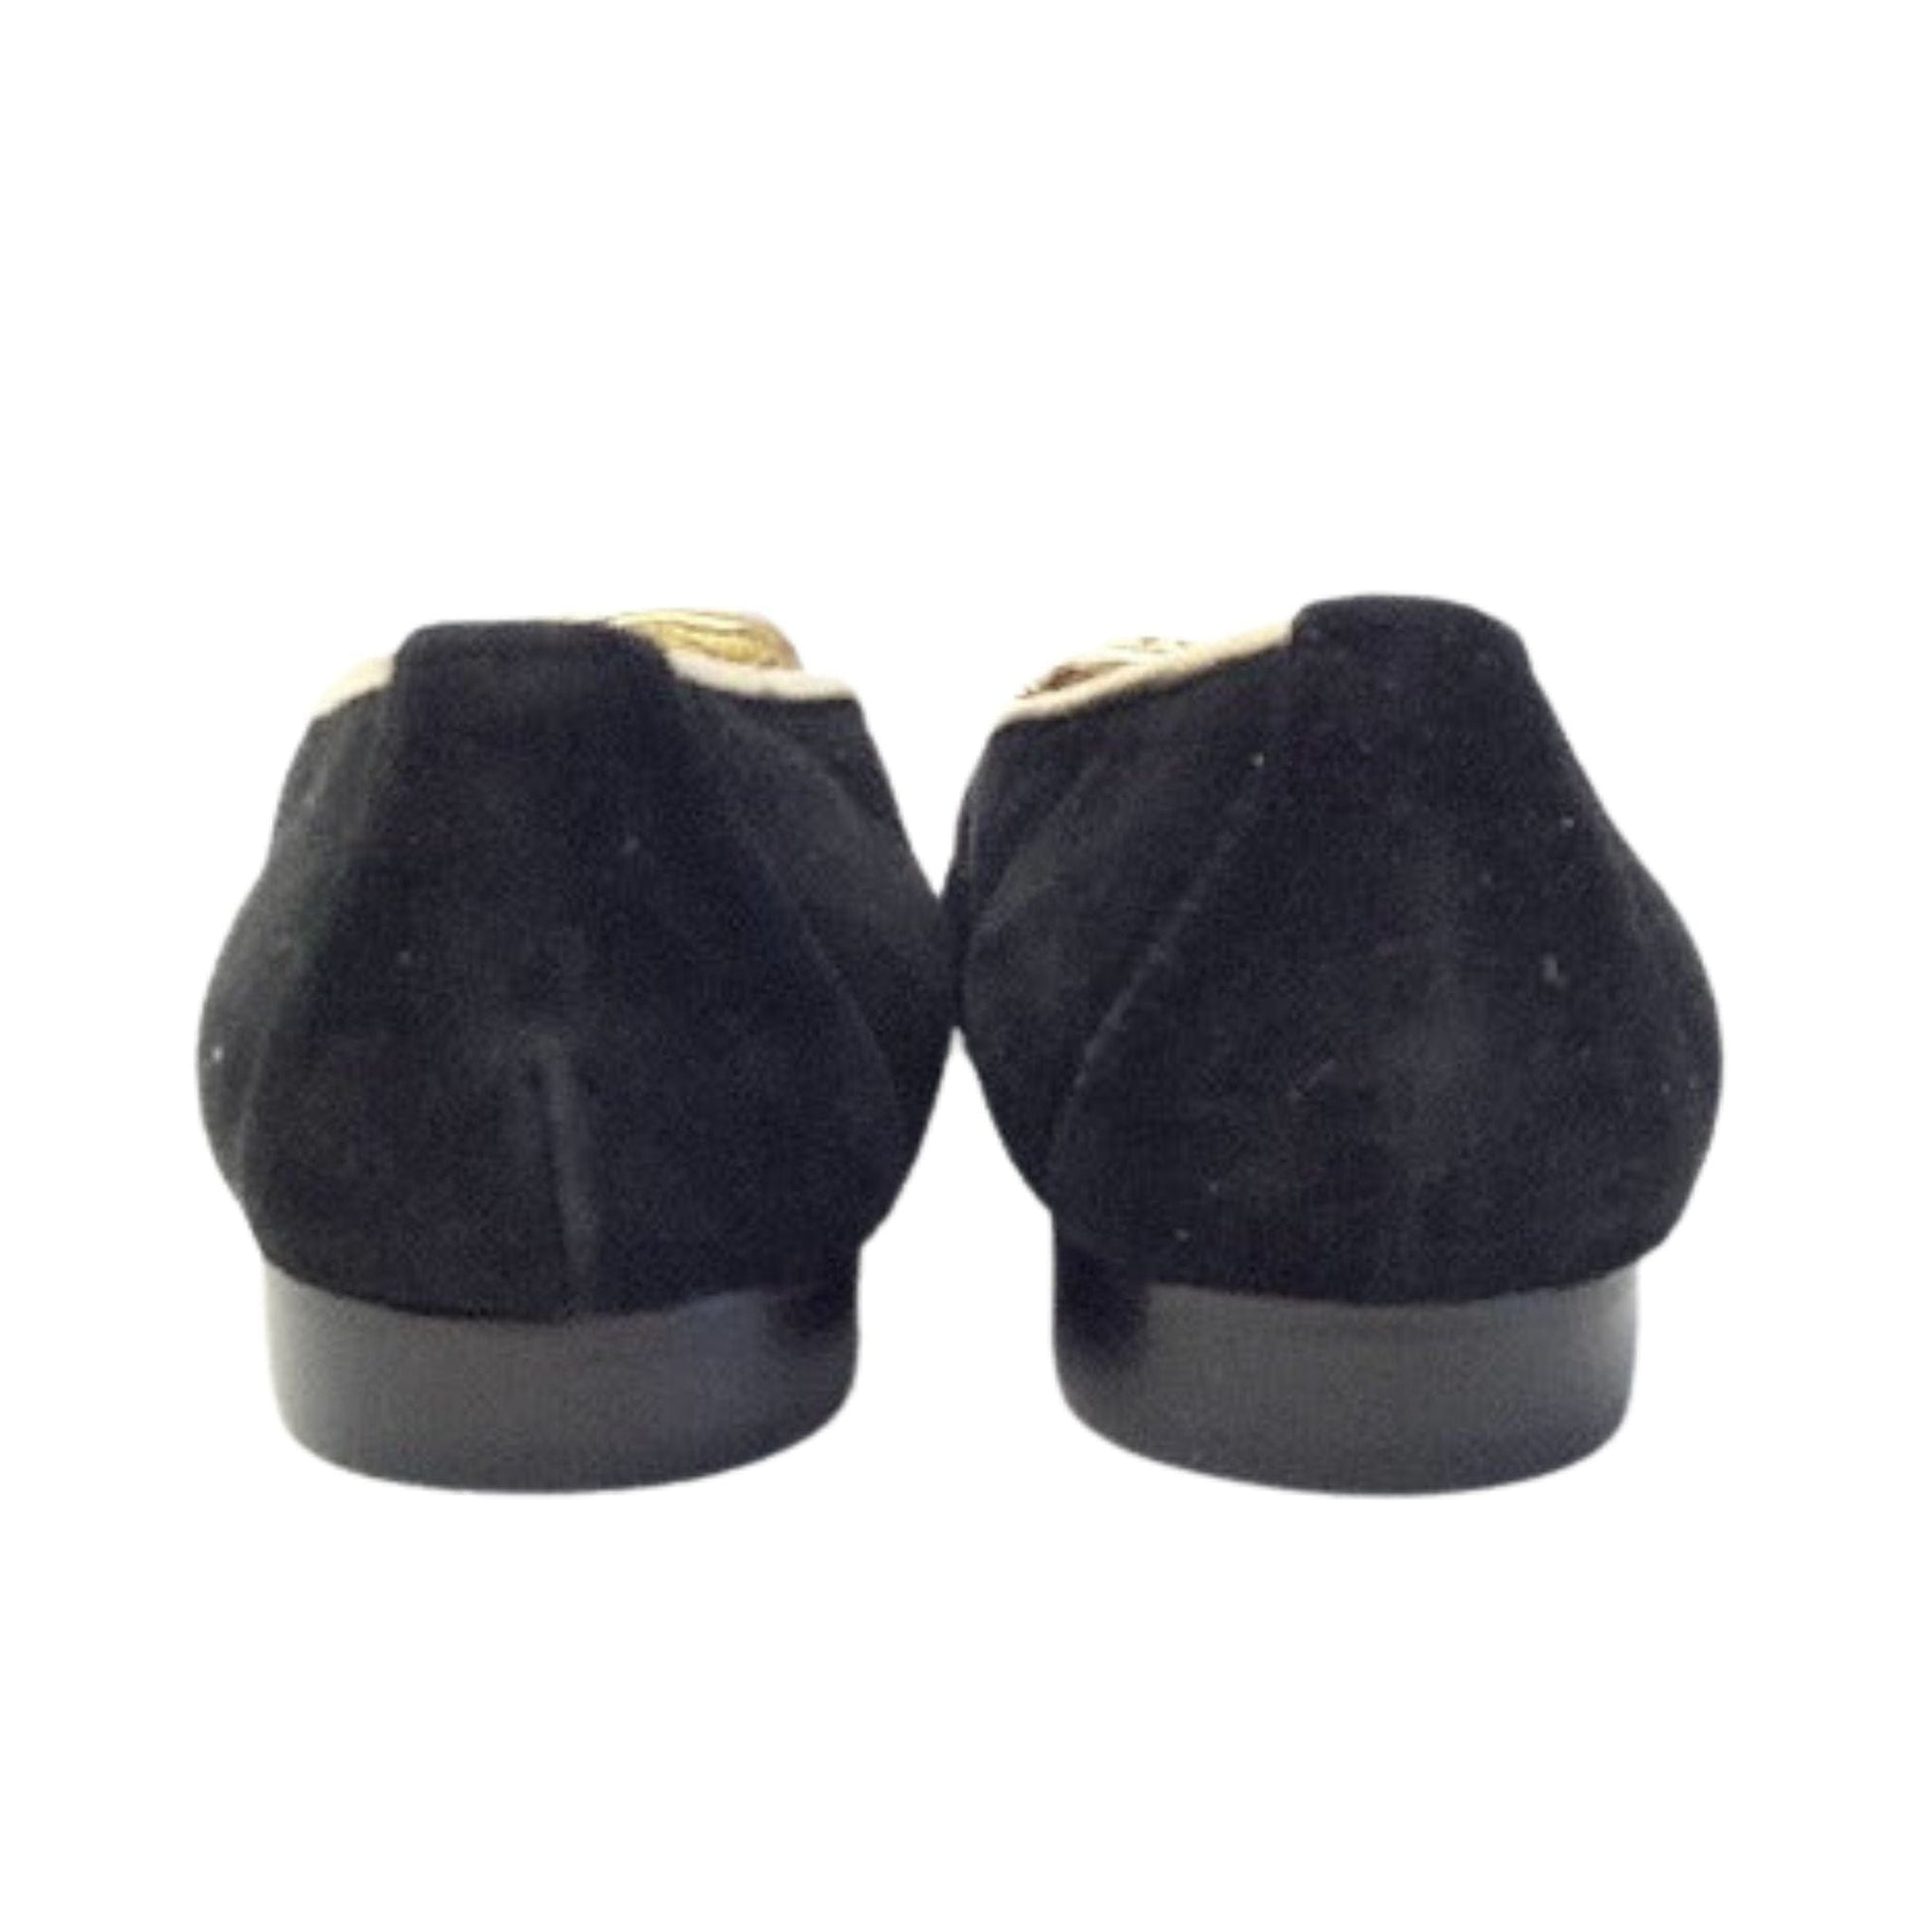 Baroque Flat Heel Shoes 6.5 / Black / Baroque